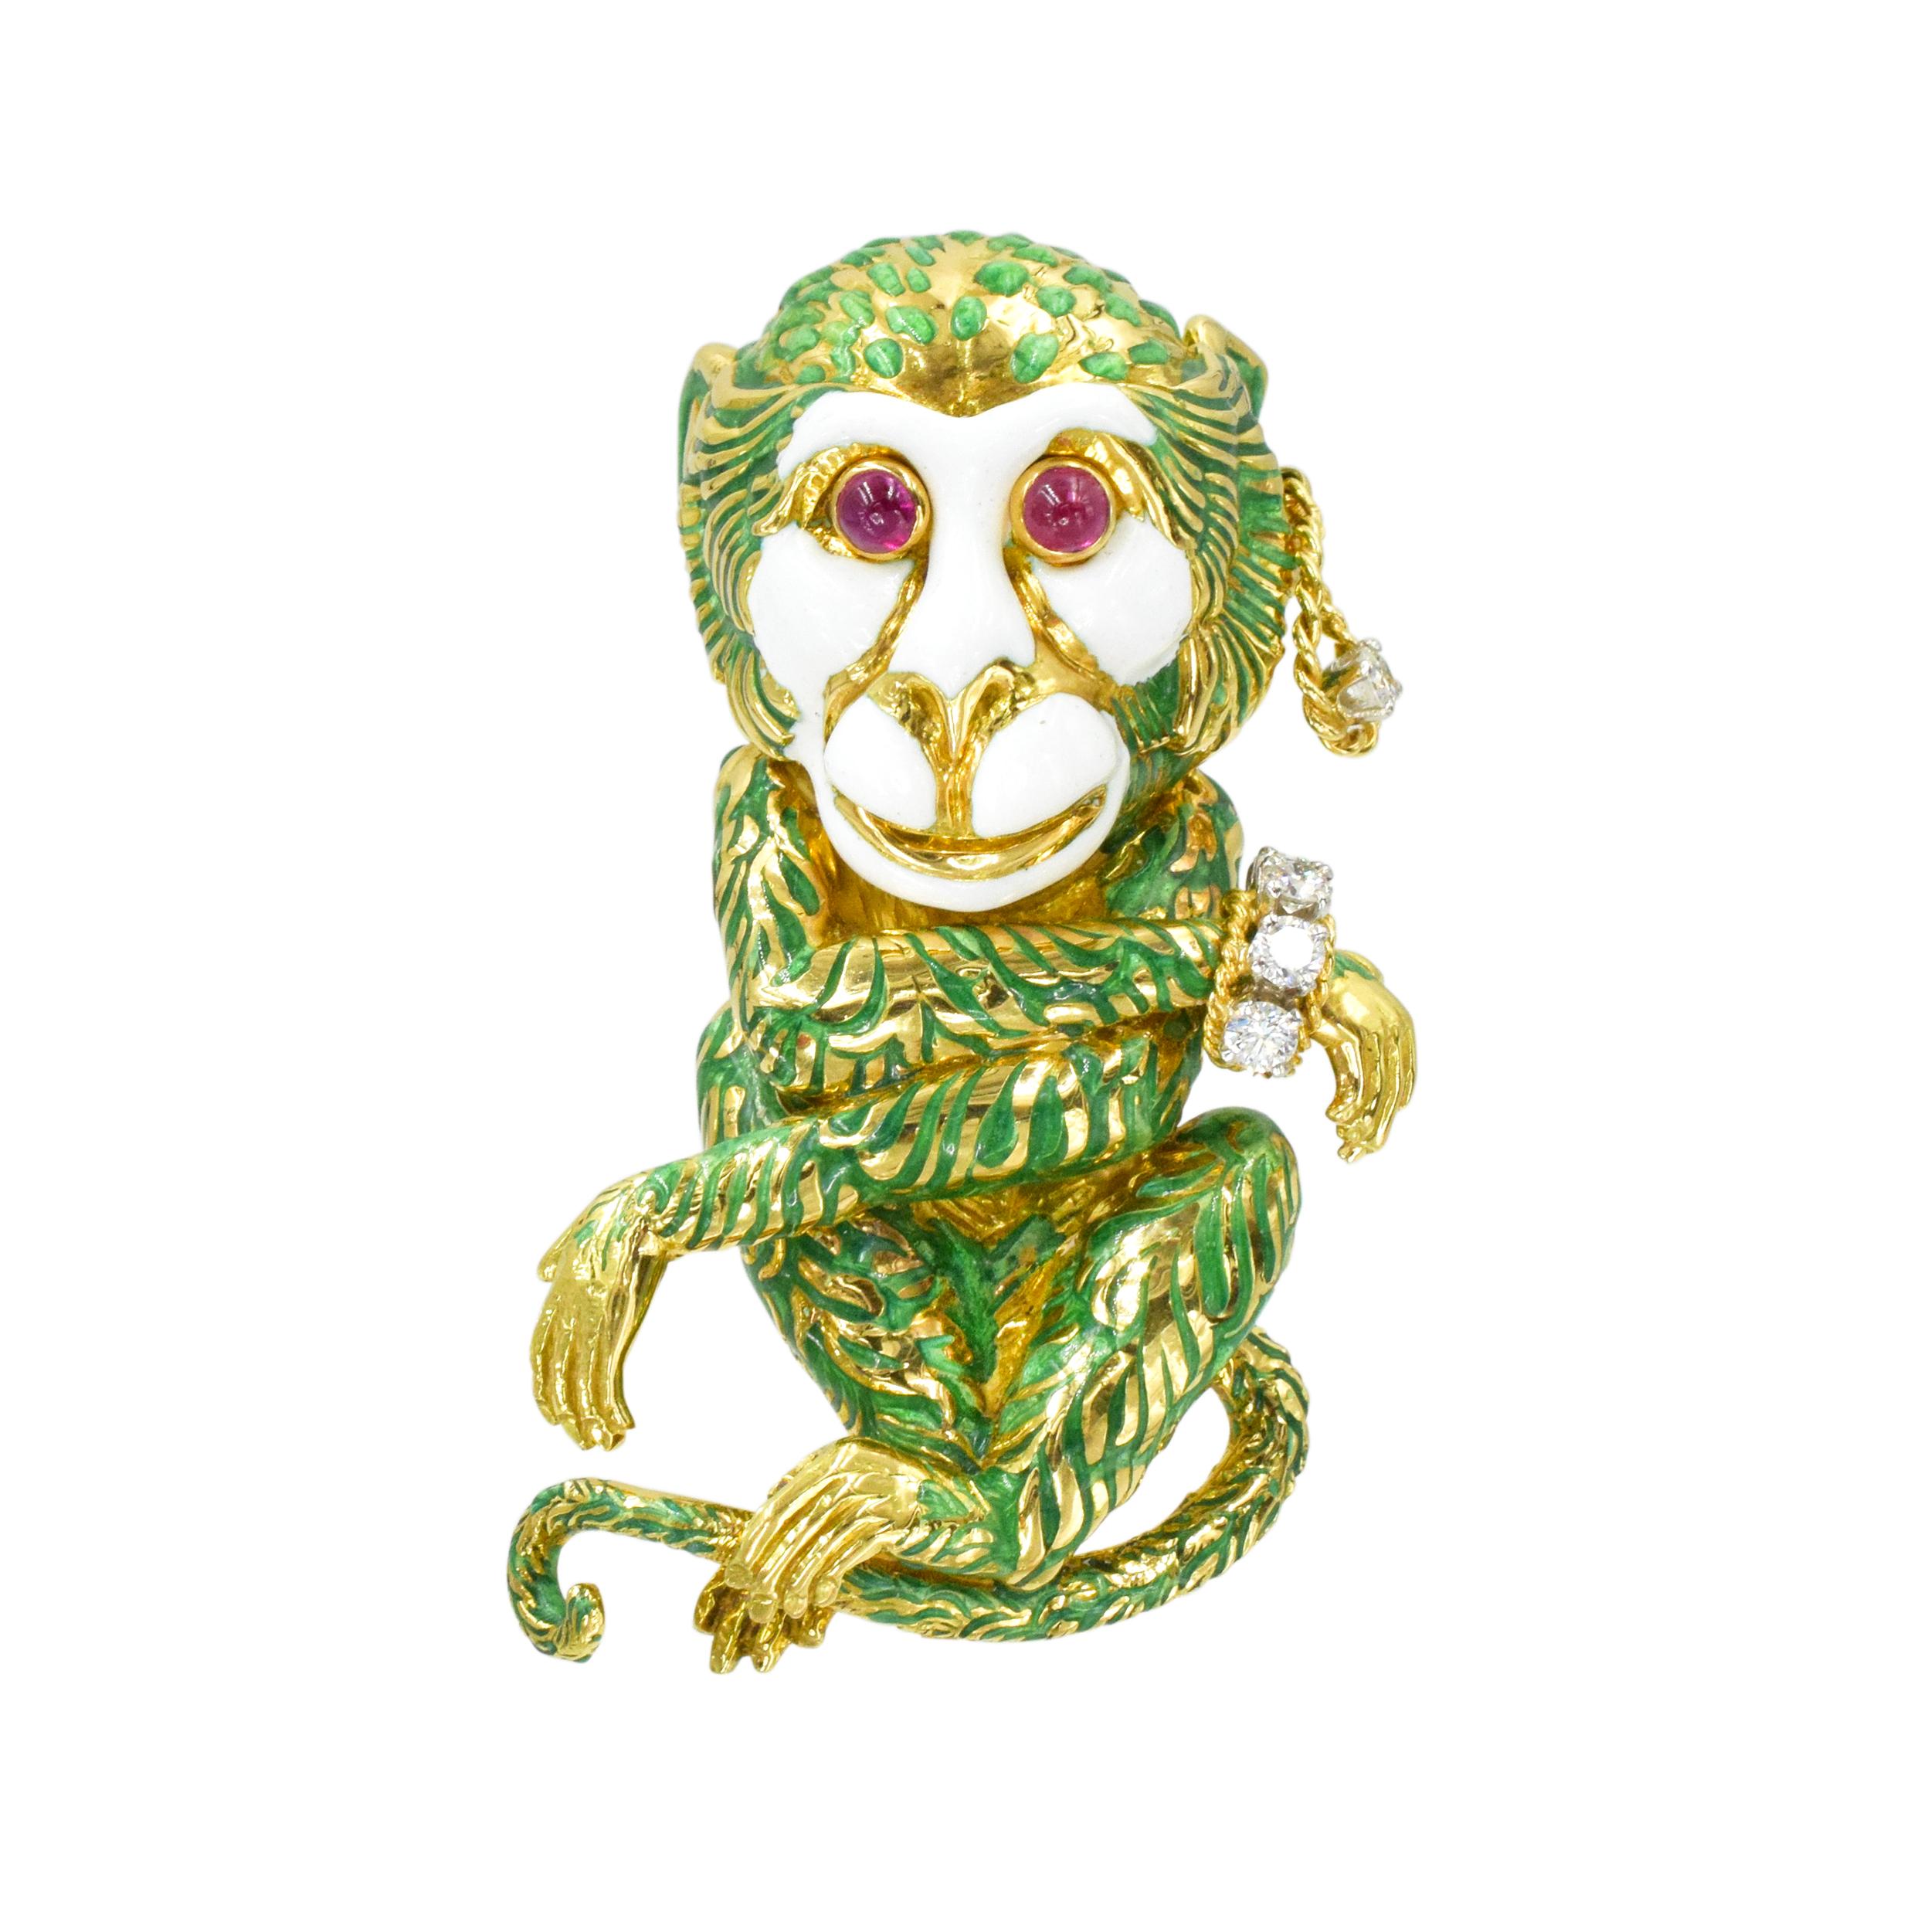 Enamel, 18k Yellow Gold, and Diamond Monkey Brooch, David Webb This brooch has a 'monkey' motif with green and white enamel, ruby eyes, and diamonds. Signed
David Webb, 18k 900